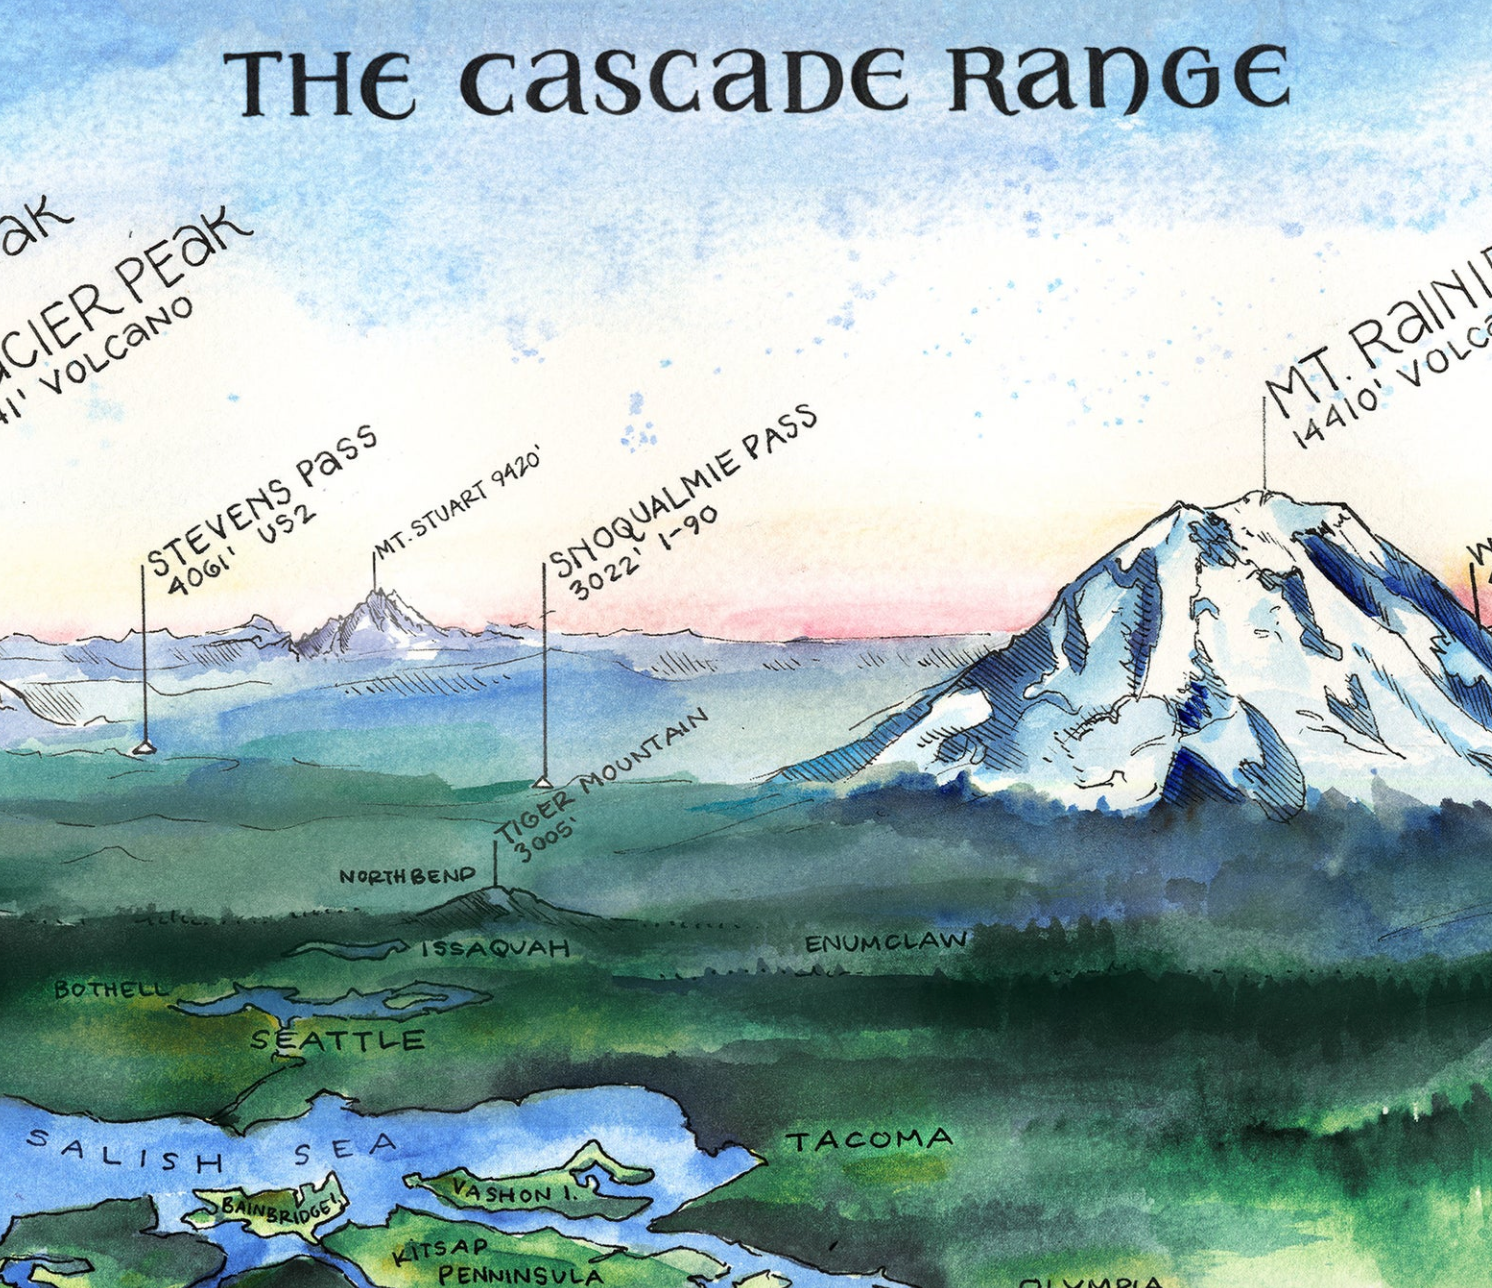 Print - 8x24 Panoramic The Cascade Range